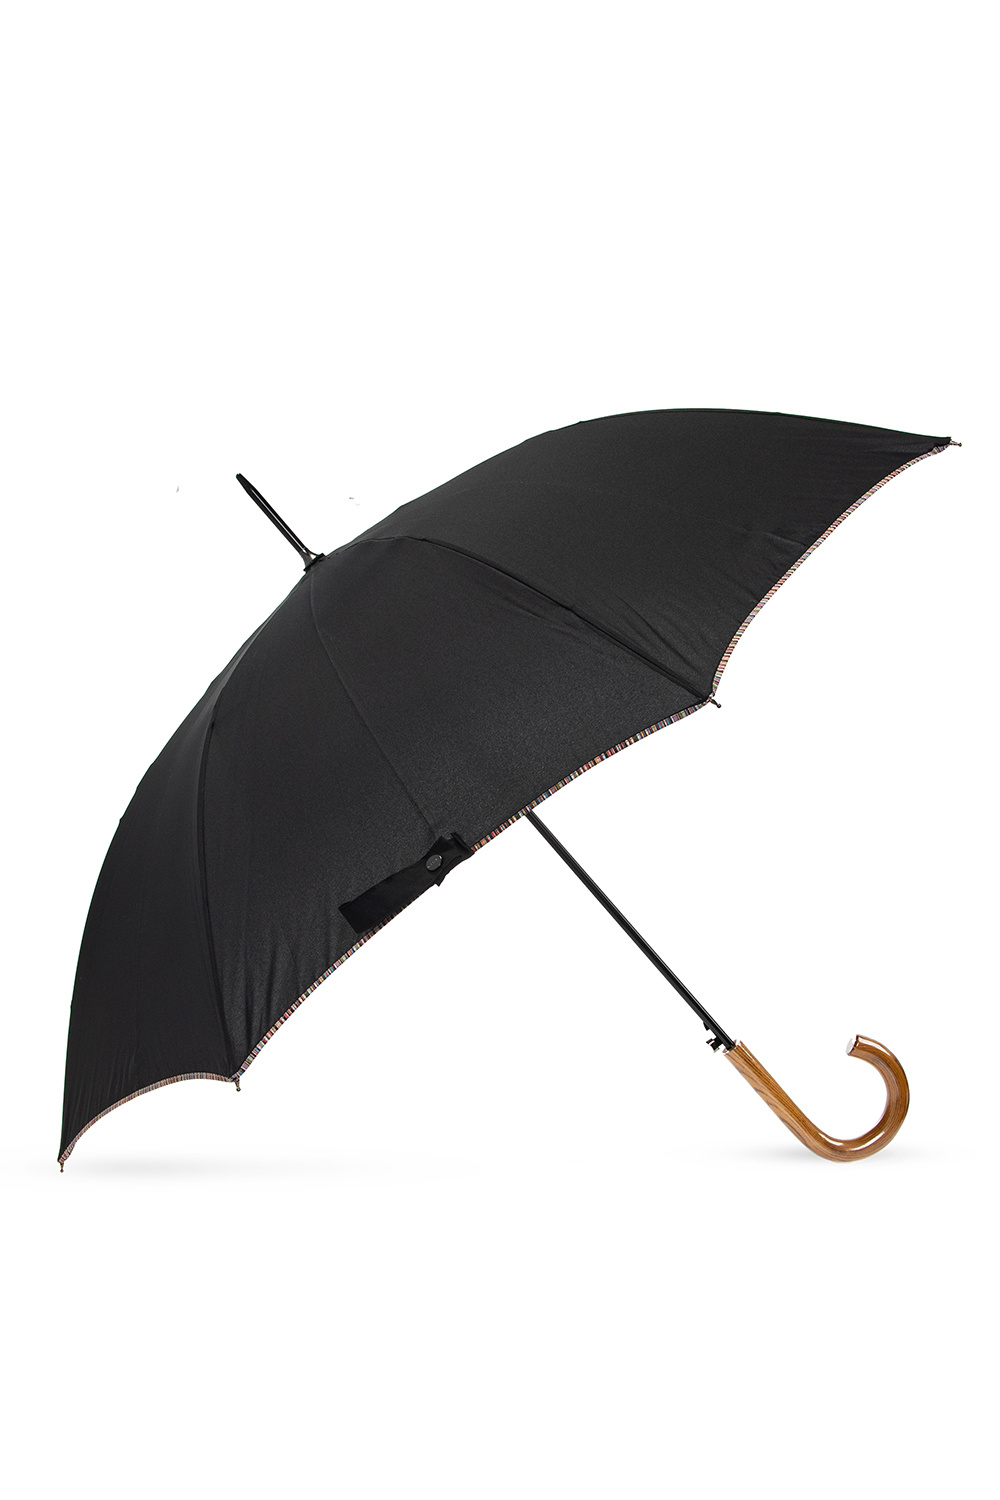 Paul Smith Leather umbrella